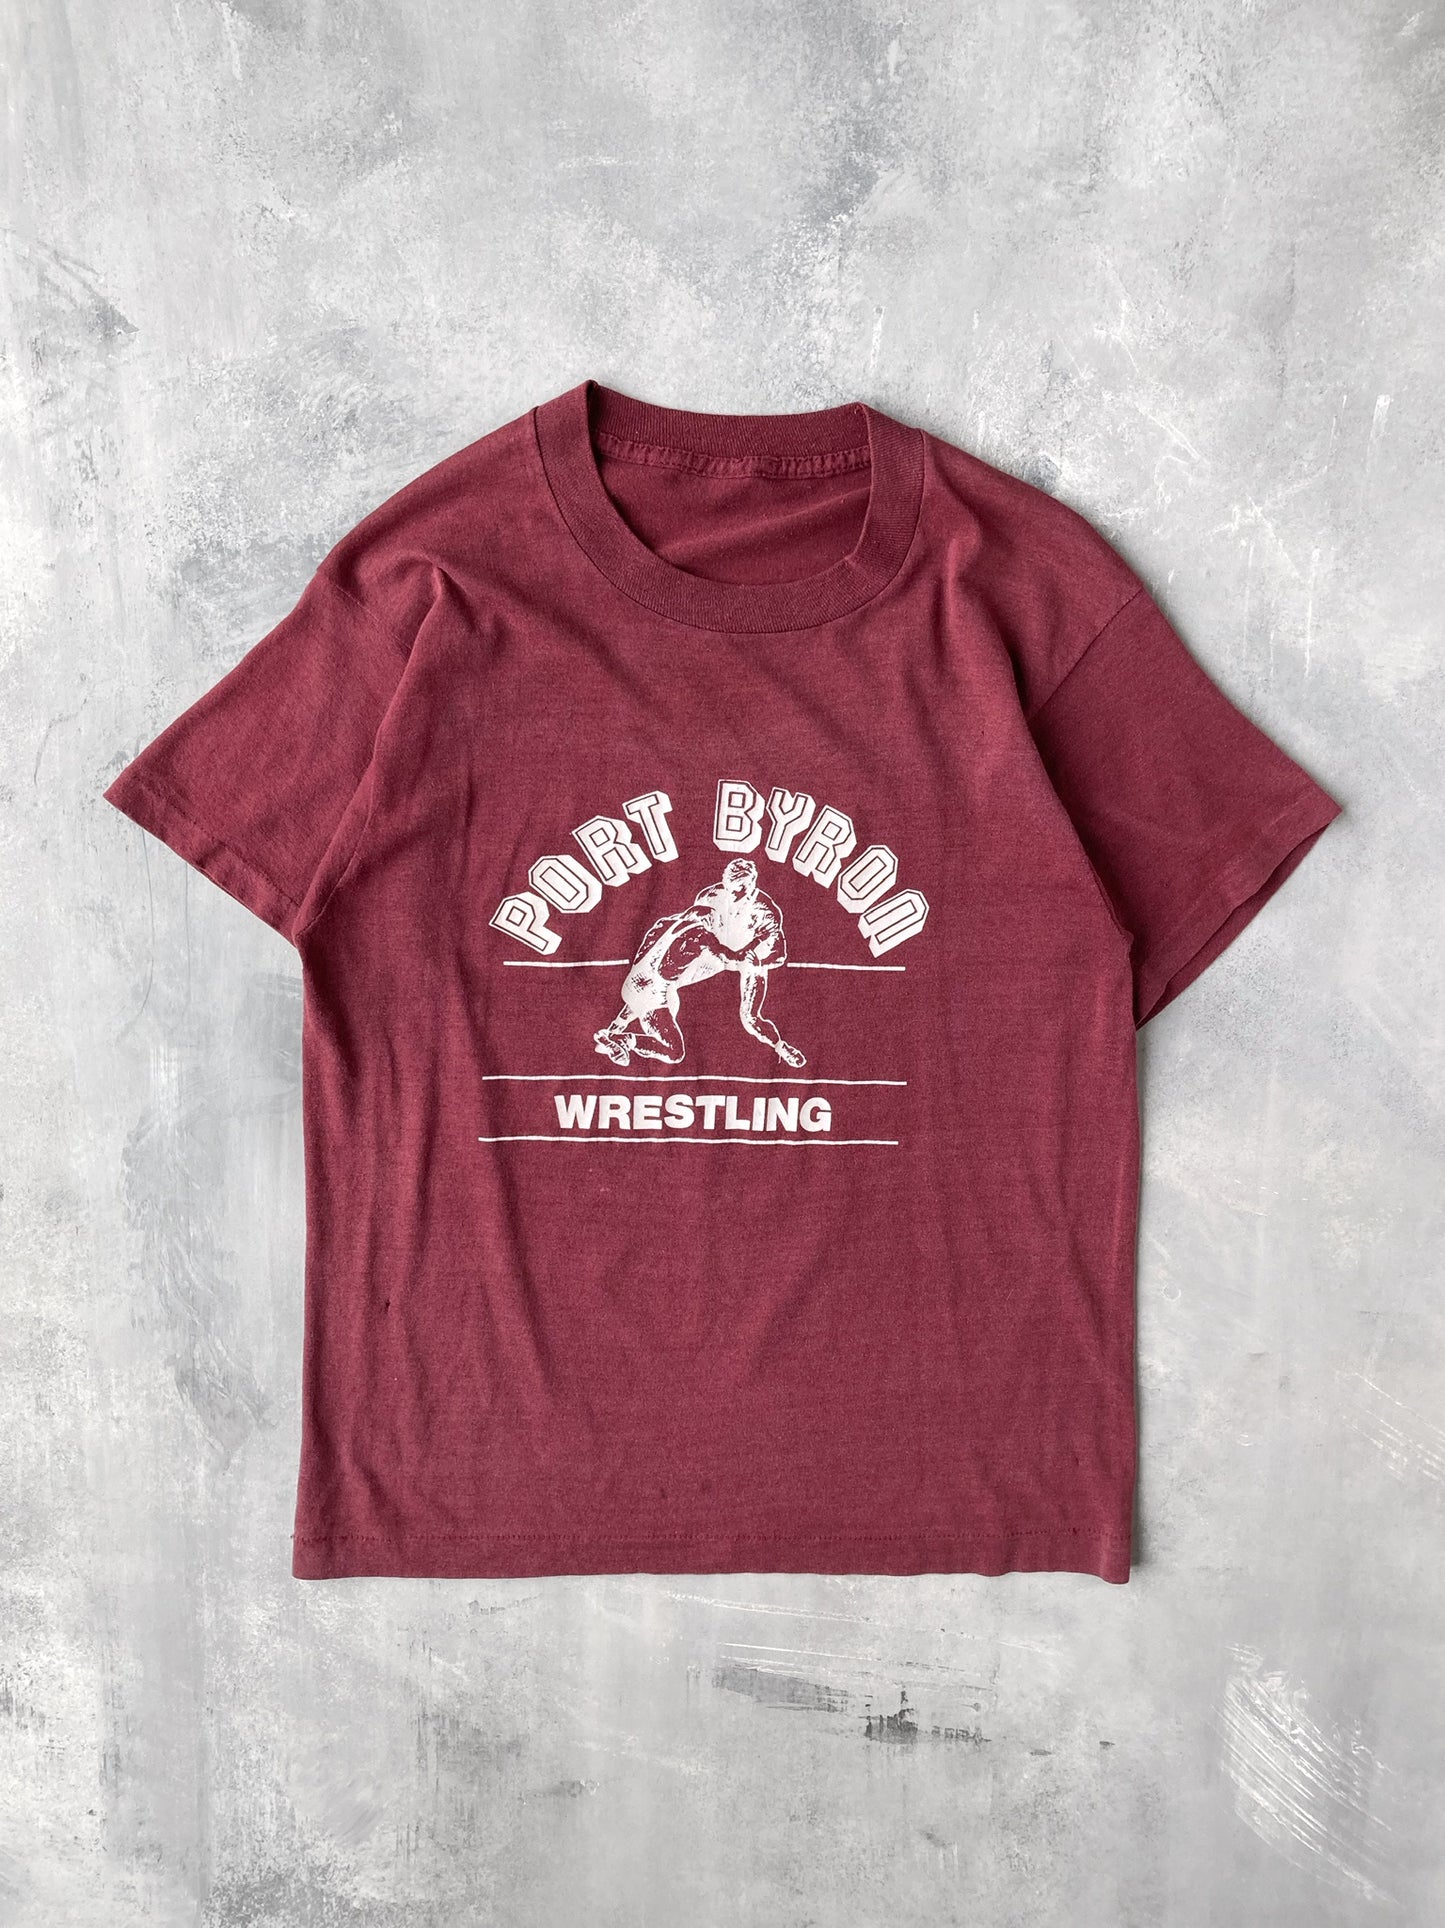 High School Wrestling T-Shirt 80's - Small